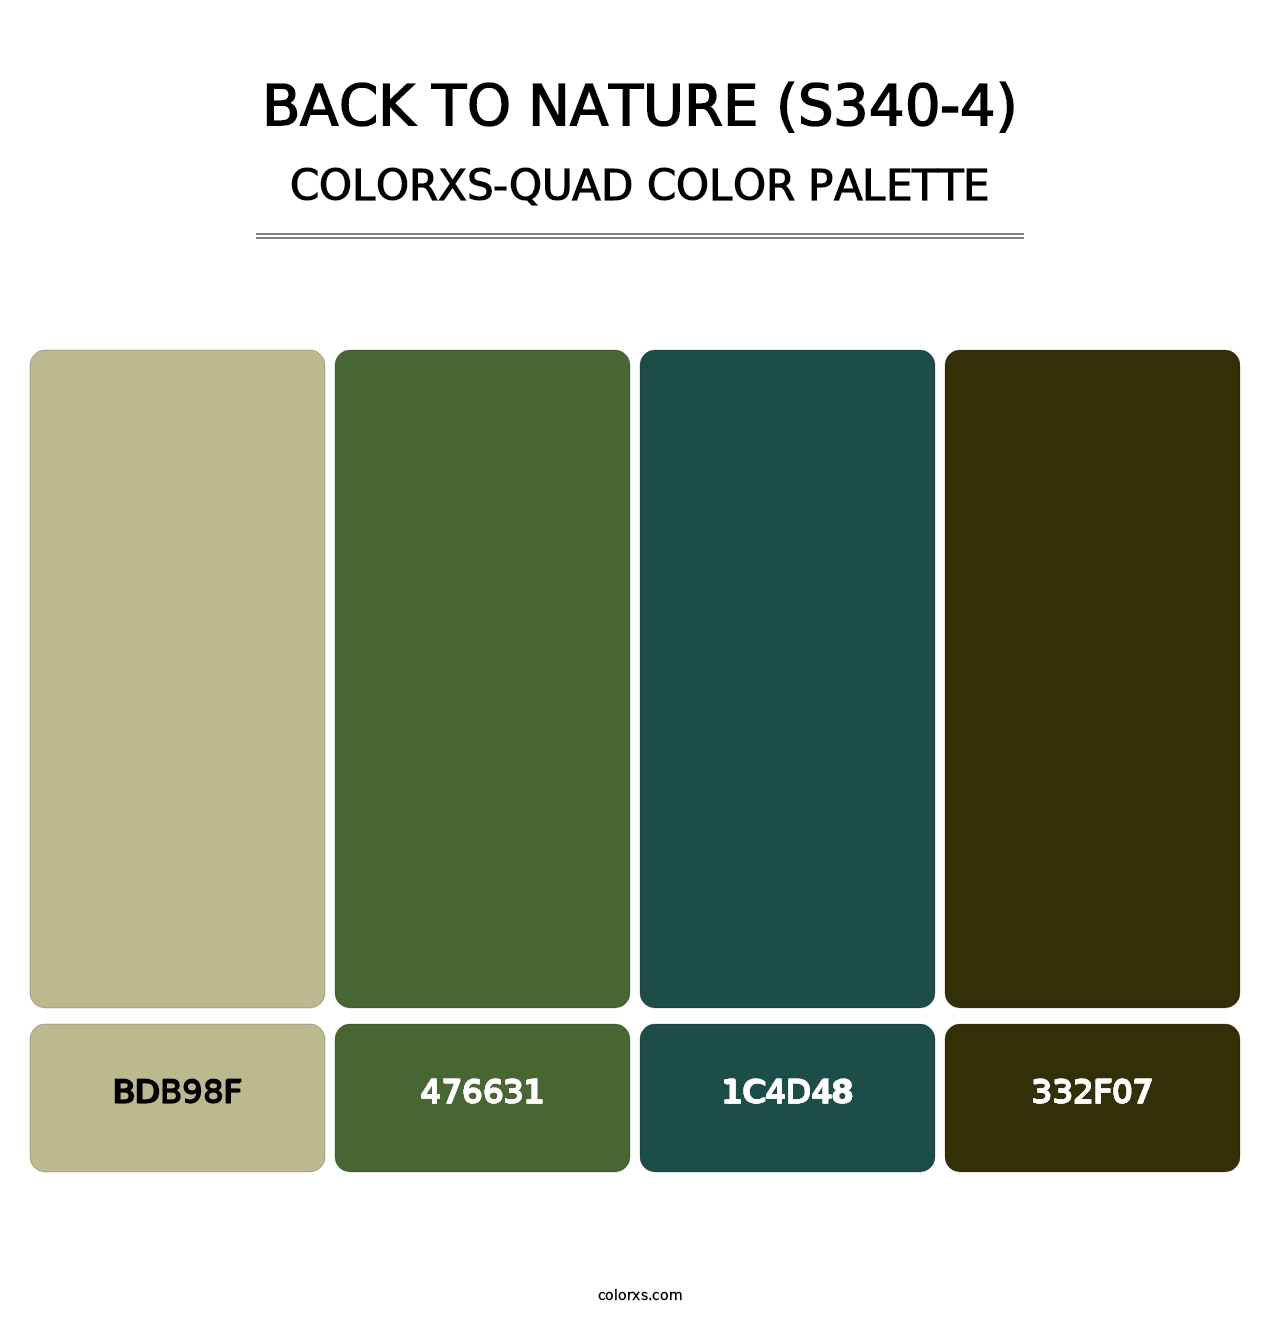 Back To Nature (S340-4) - Colorxs Quad Palette